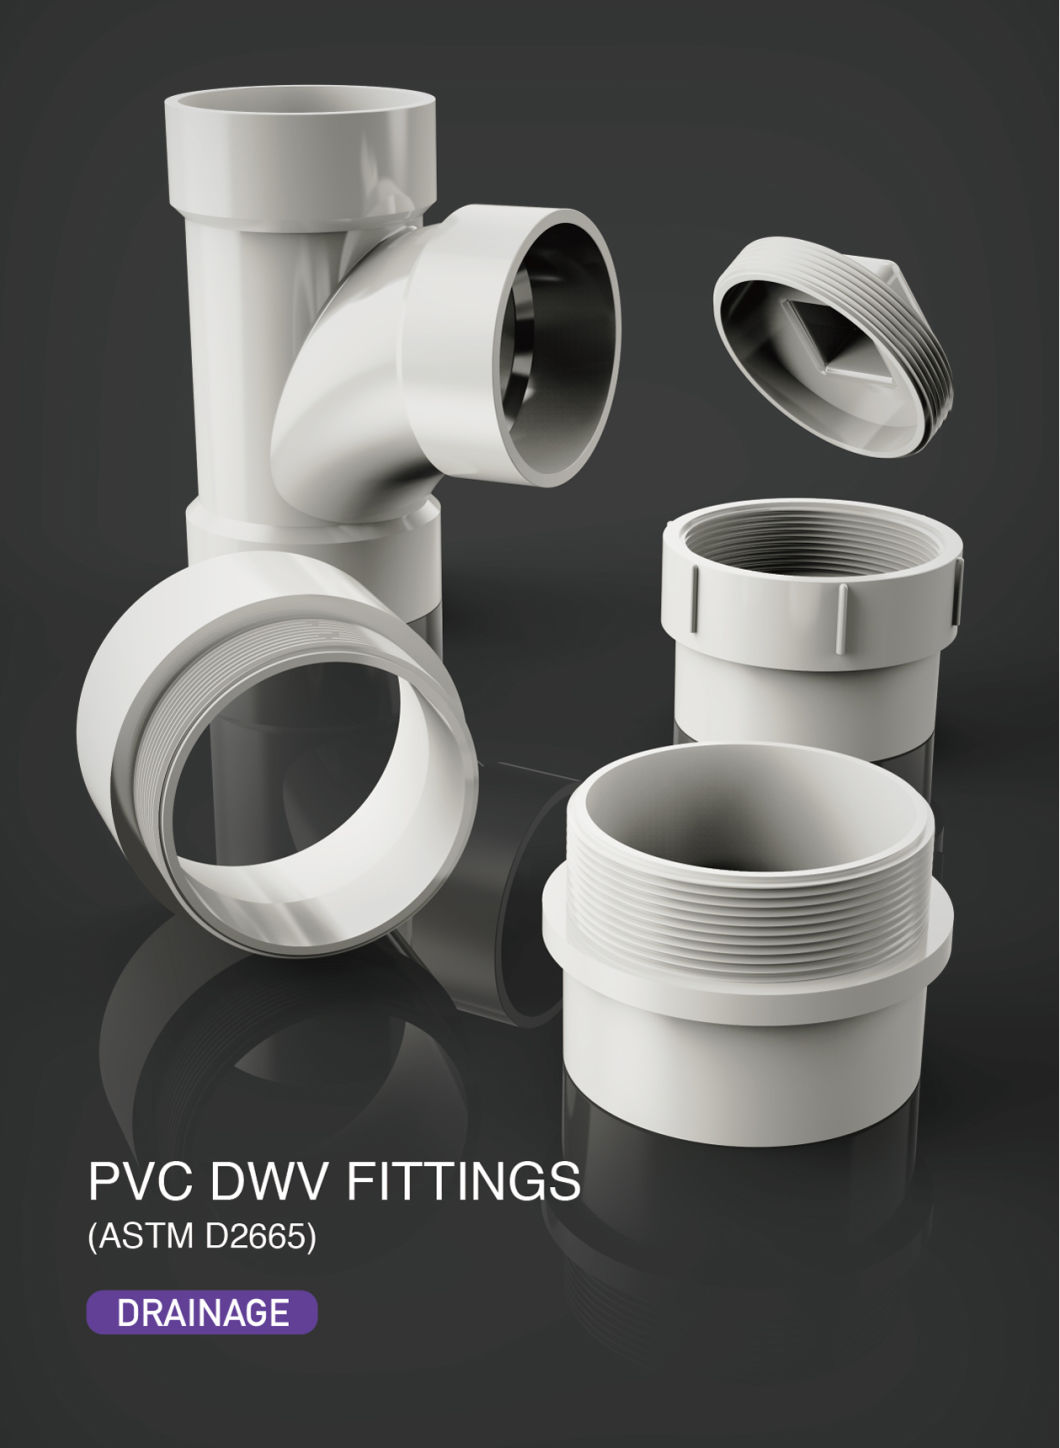 Era PVC NSF & Upc Certificate Dwv Fitting Toilet Flange for Drainage ASTM D2665